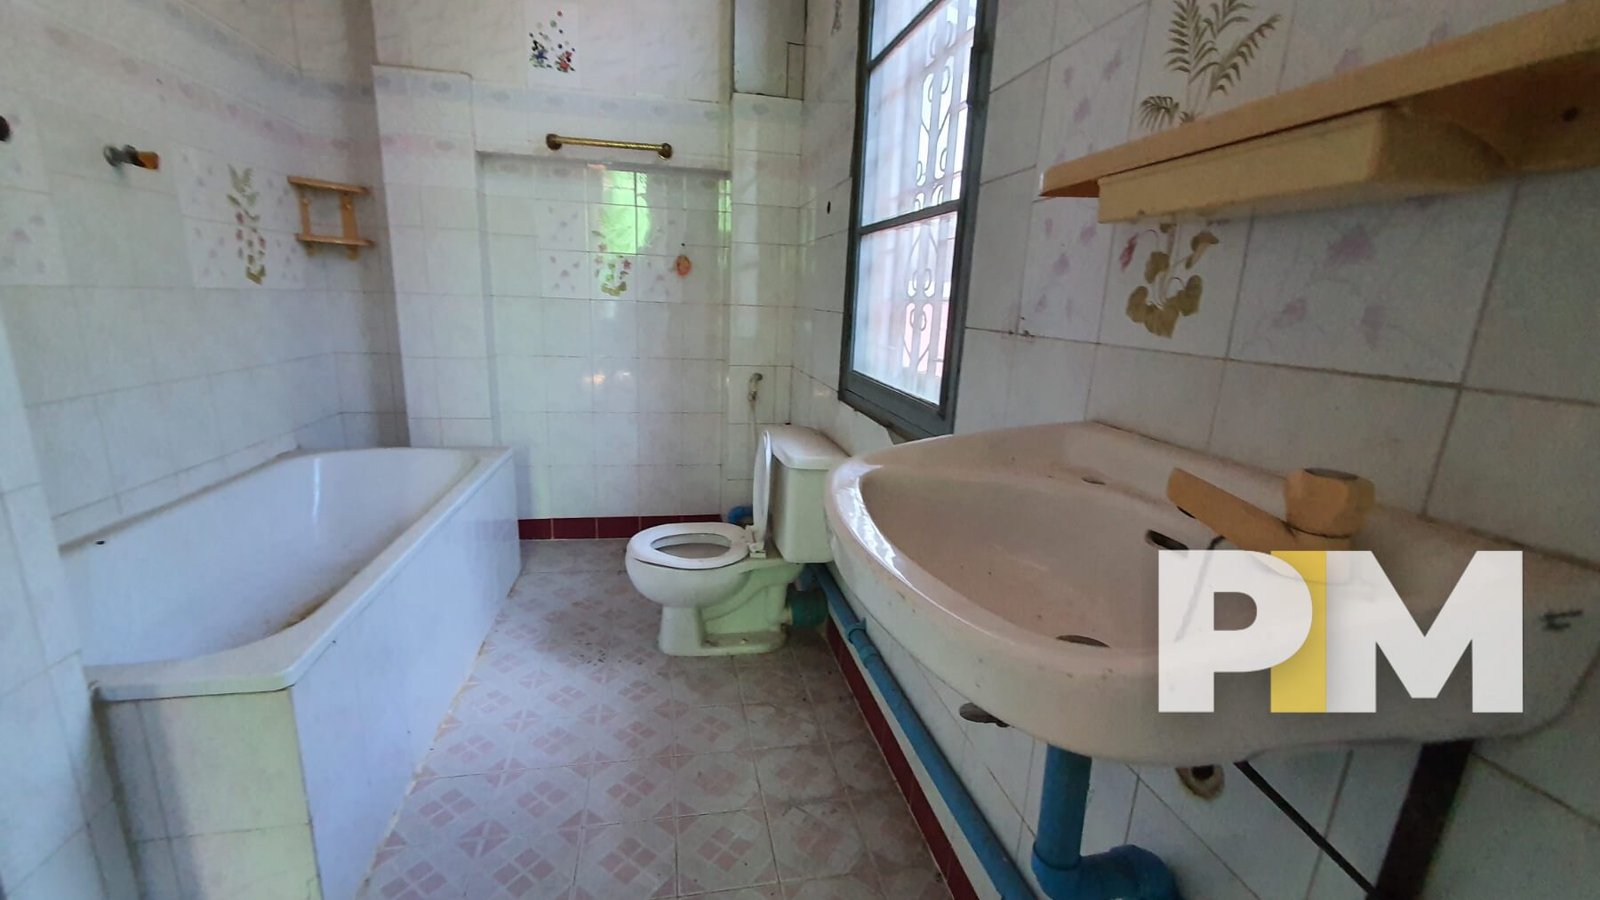 Bathroom with bathtub - Myanmar Real Estate